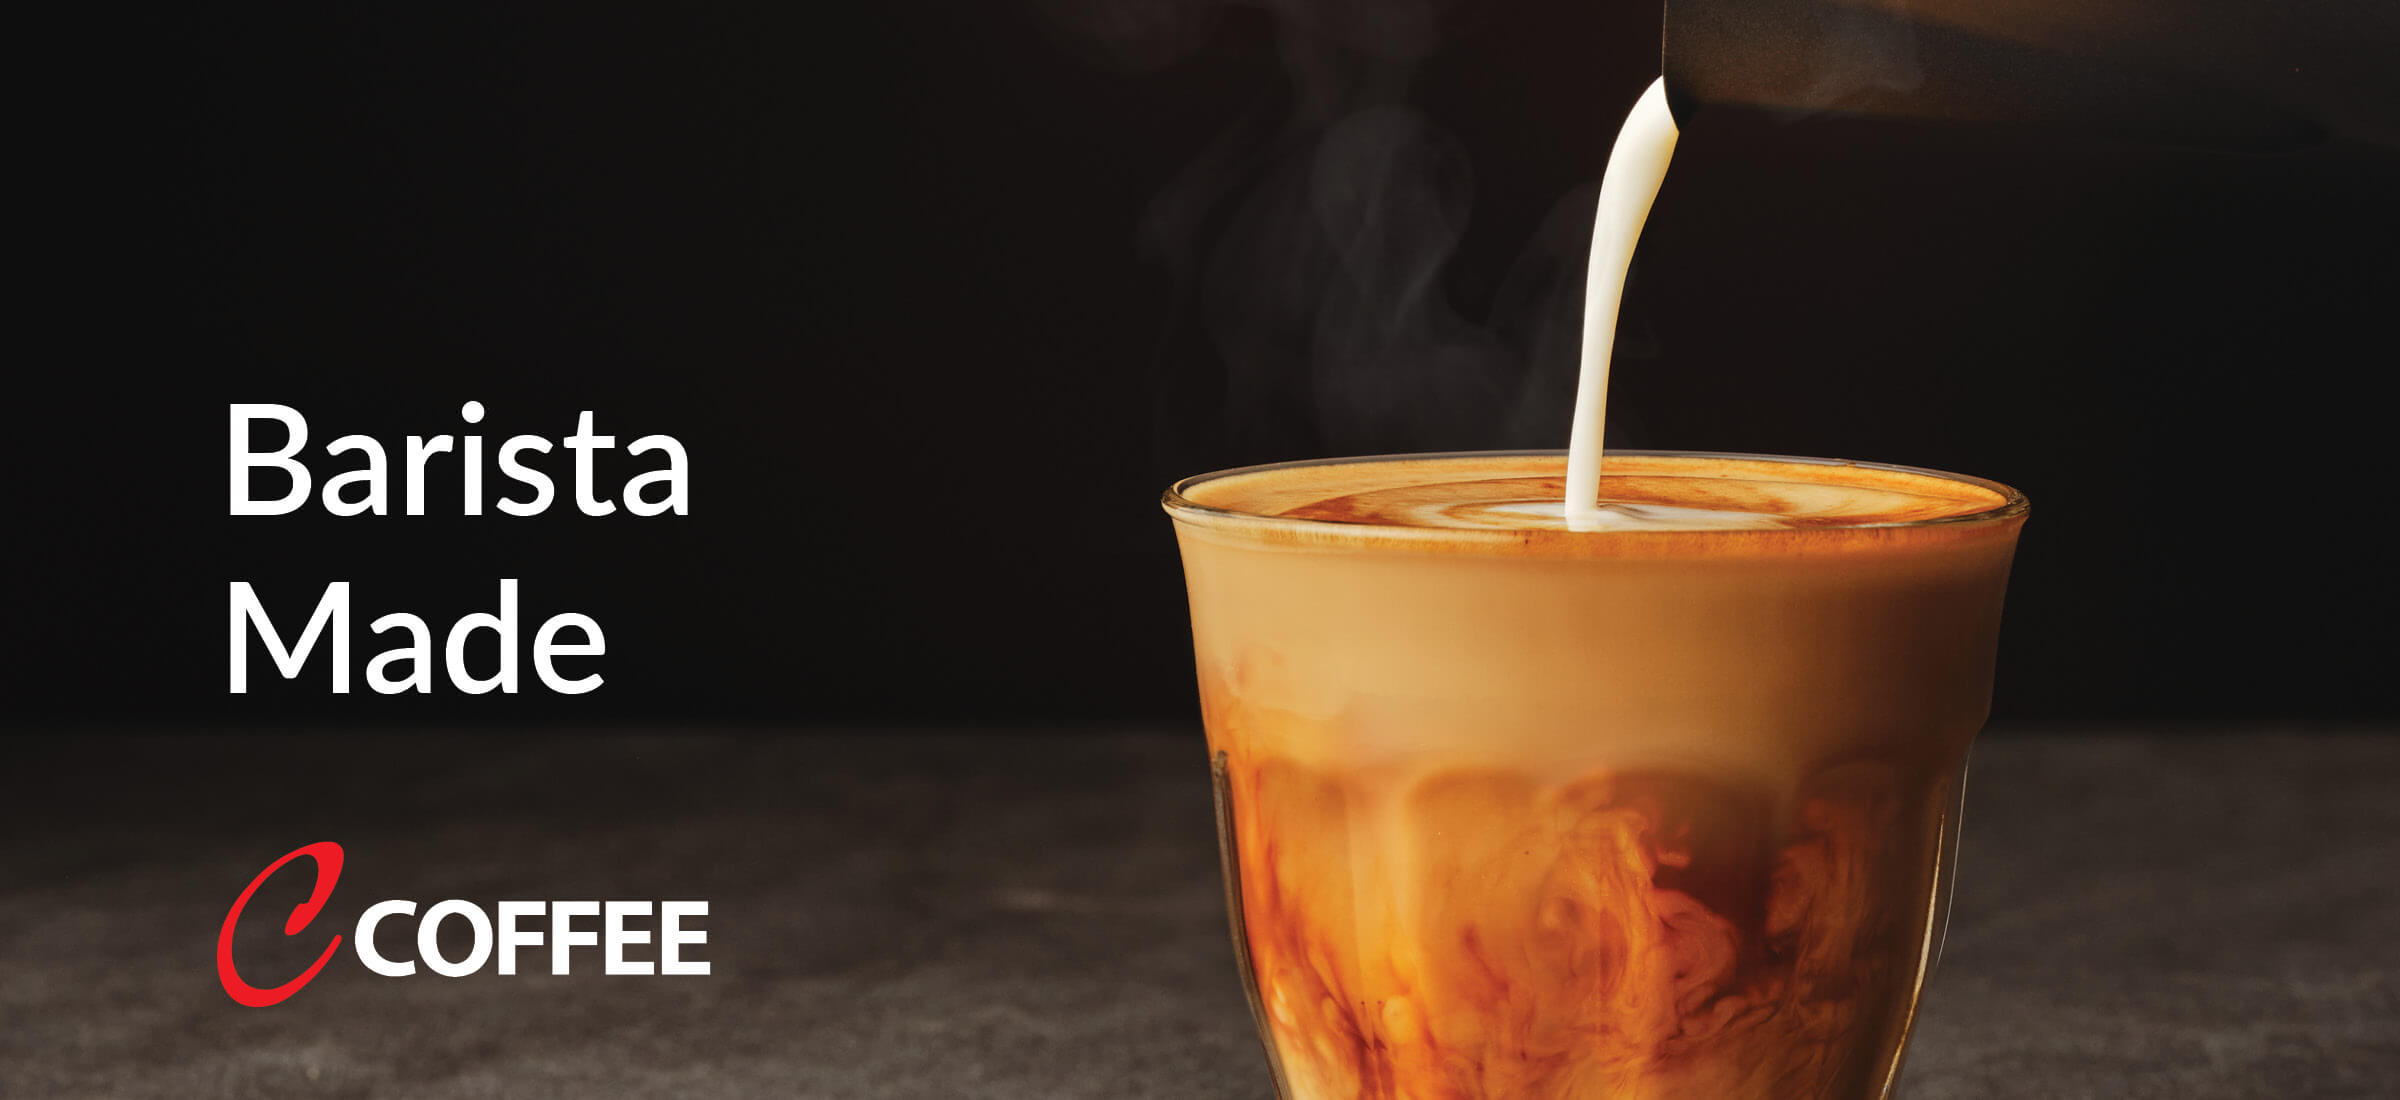 Barista made C Coffee Hot Latte